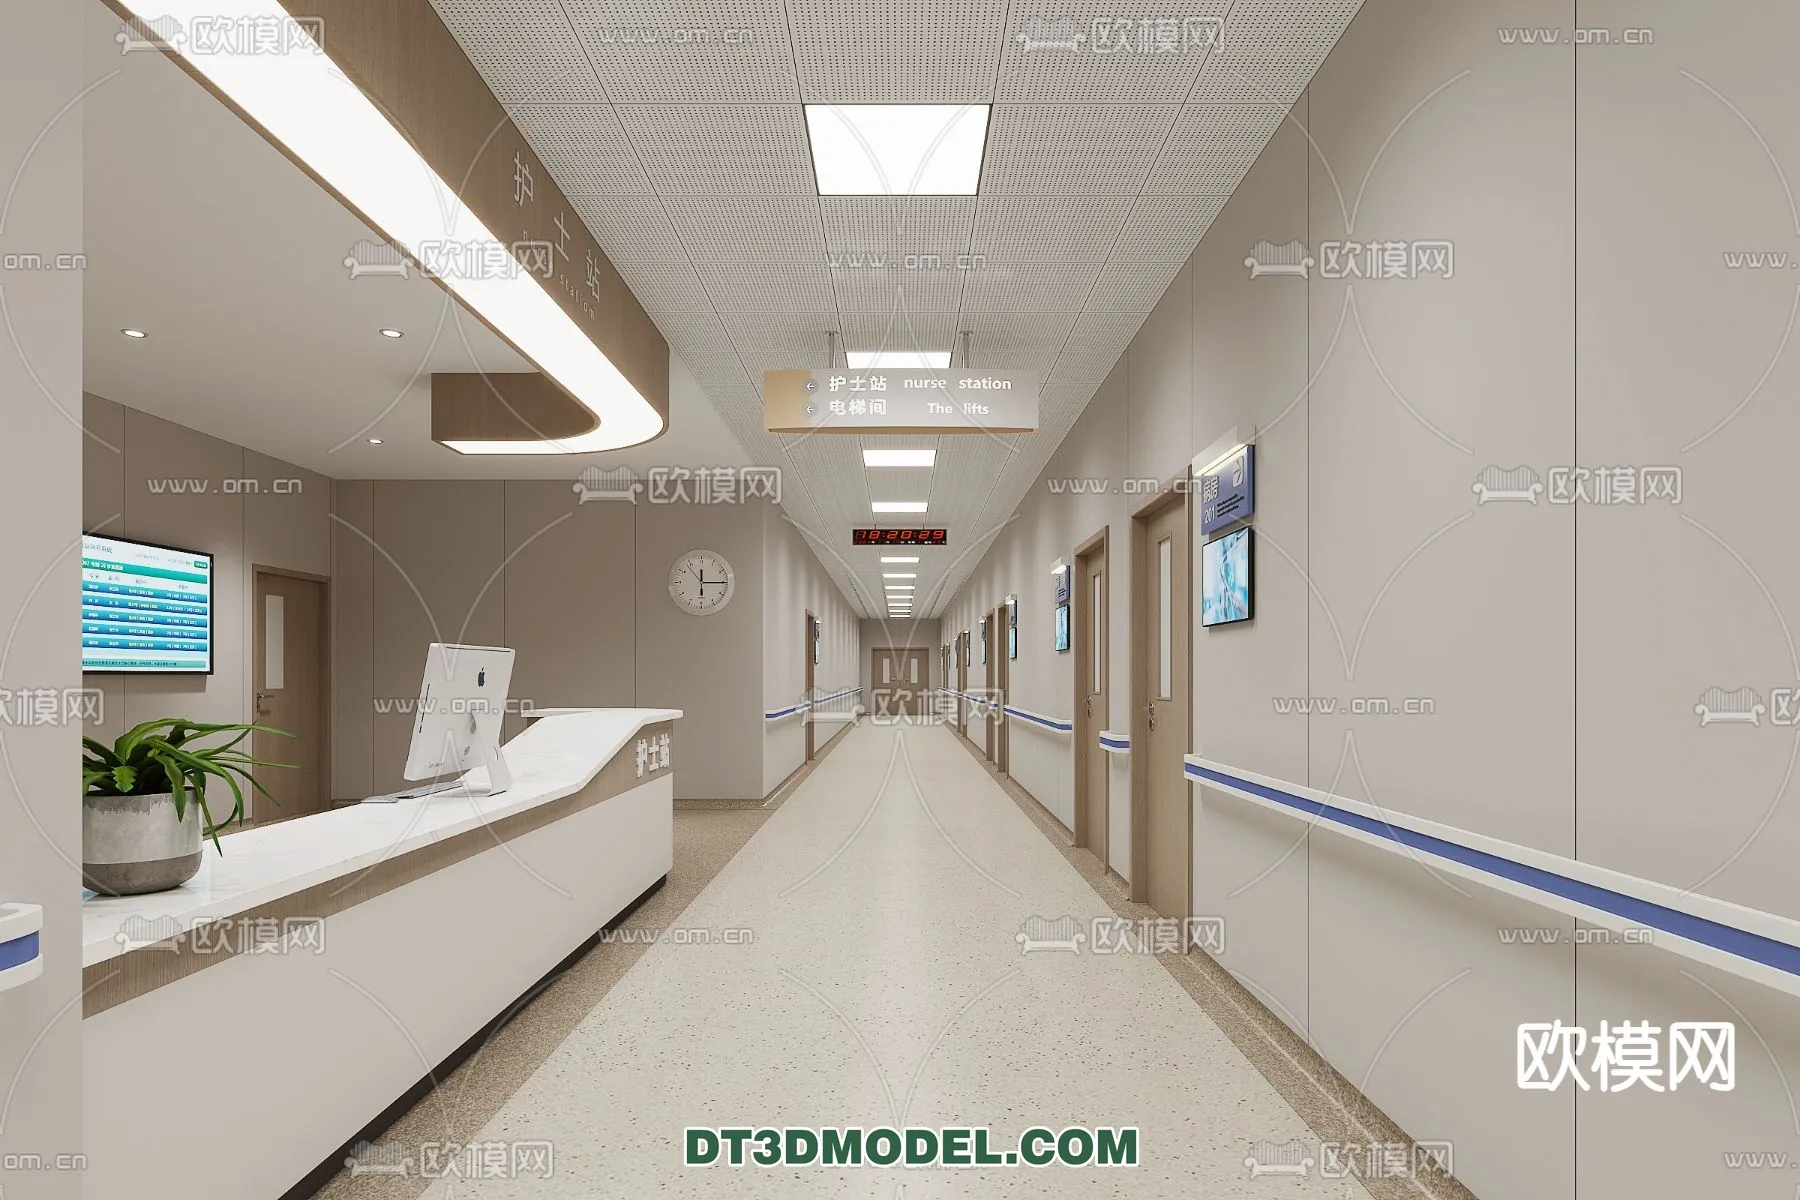 HOSPITAL 3D SCENES – MODERN – 0158